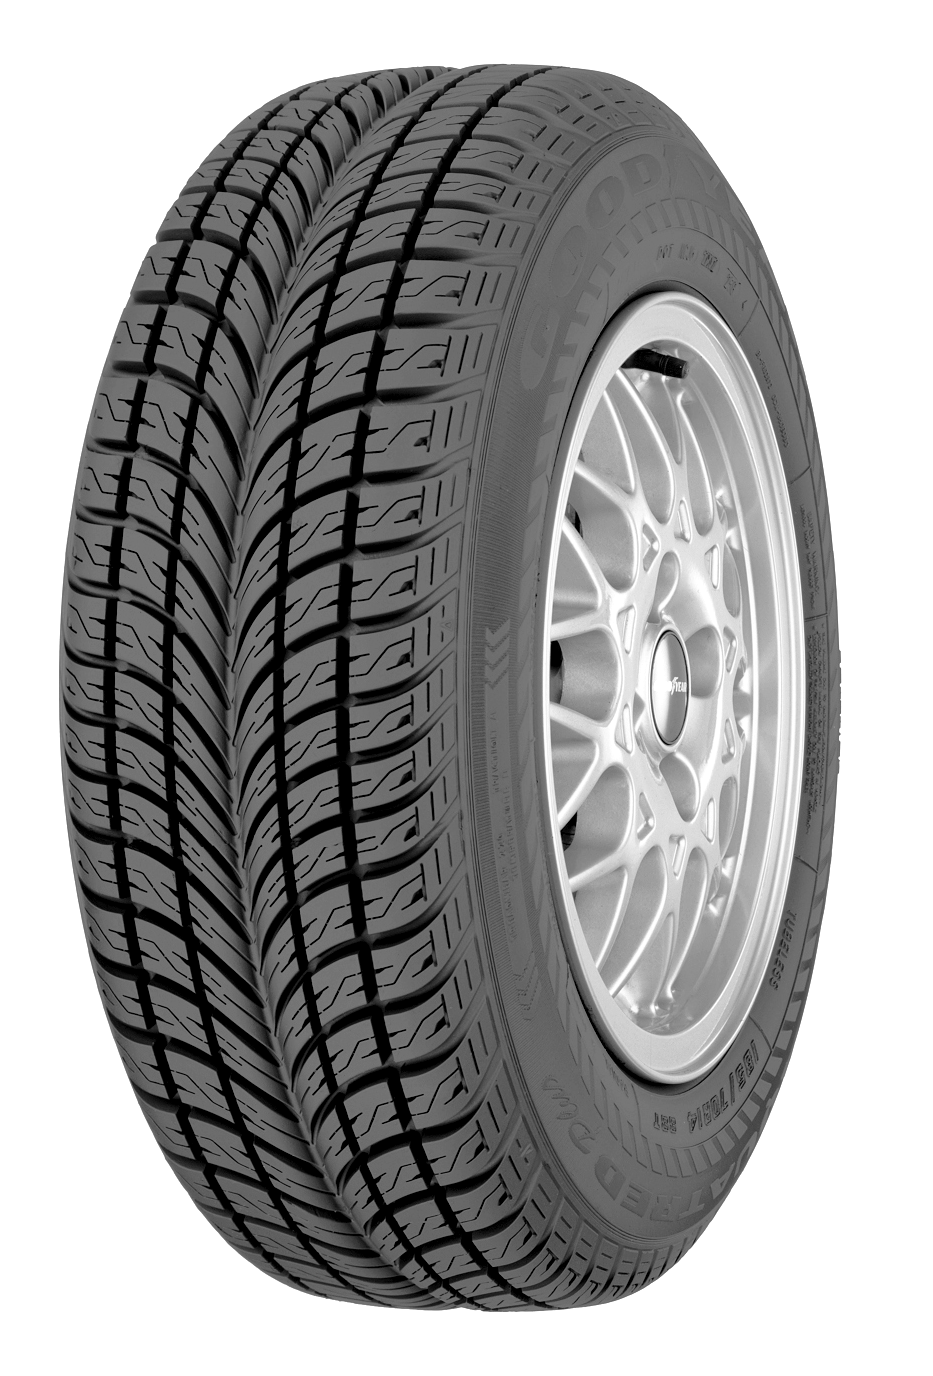 Goodyear Tire & Rubber — Wikipédia